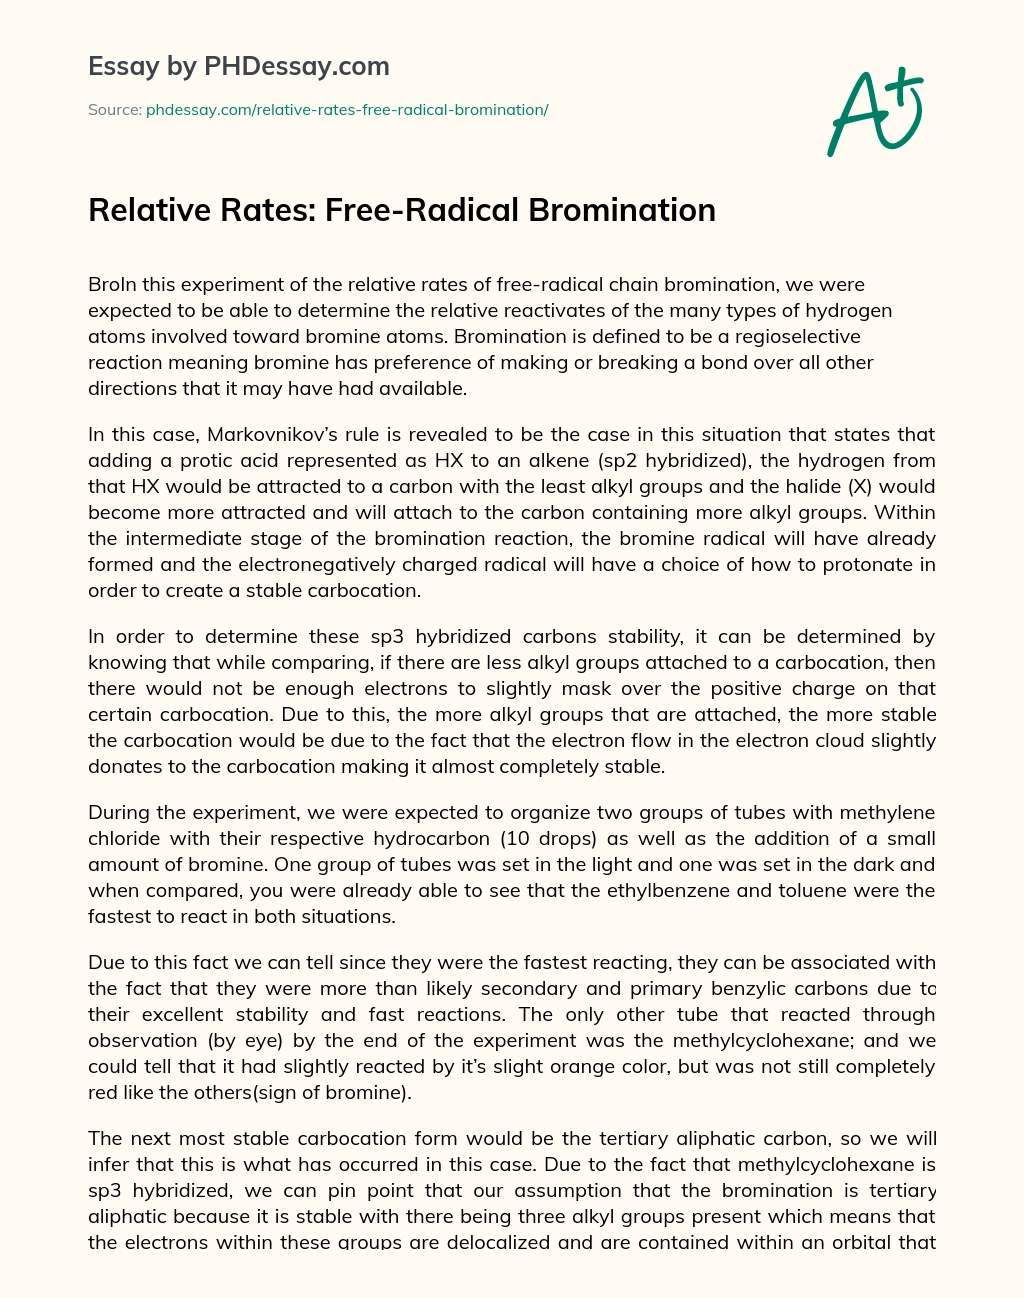 Relative Rates: Free-Radical Bromination essay